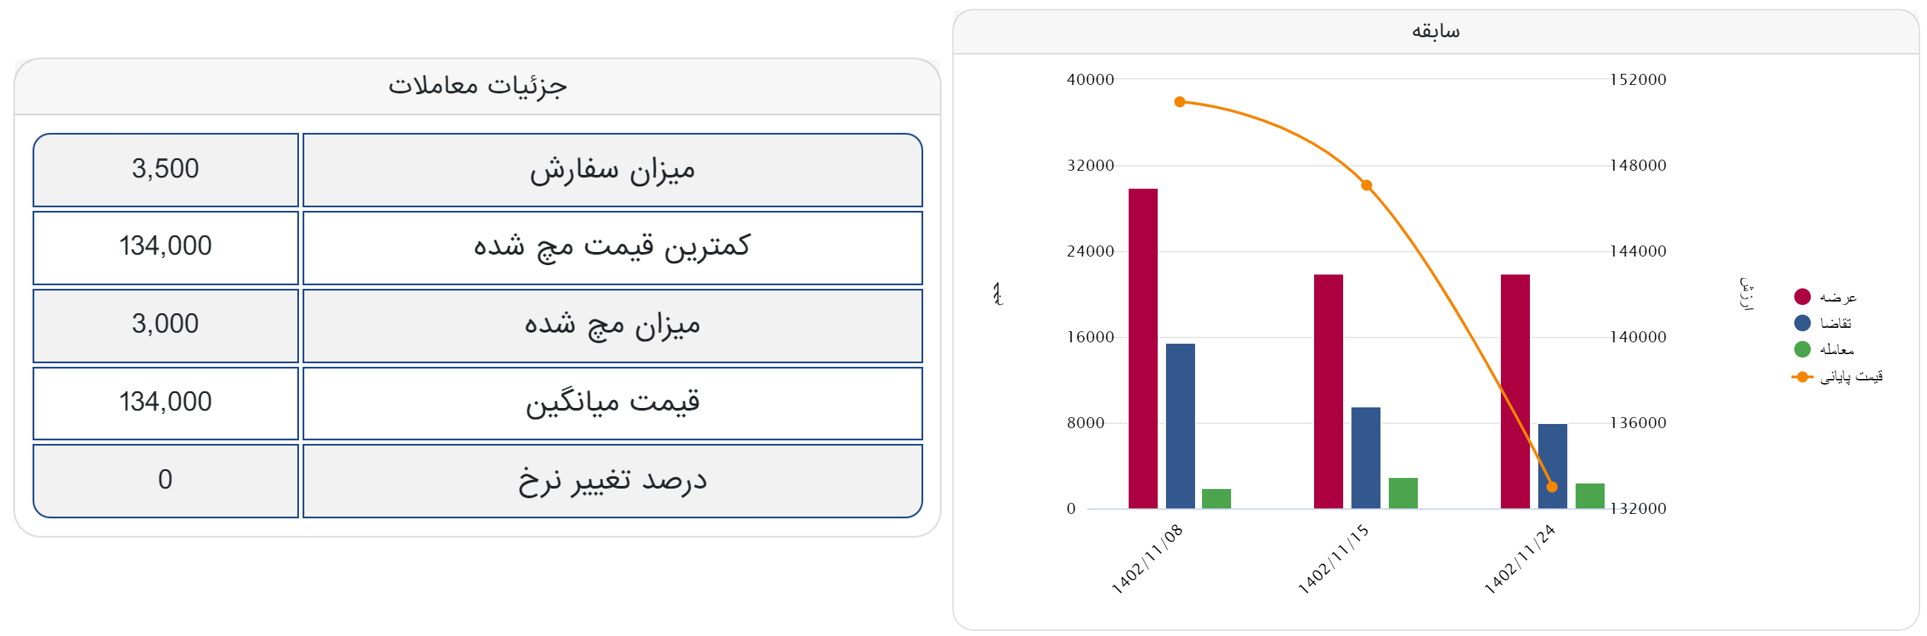 بورس کالا| معامله ۱۳/۶ درصد آهن اسفنجیِ صبا فولاد خلیج فارس بر روی تابلوی معاملات